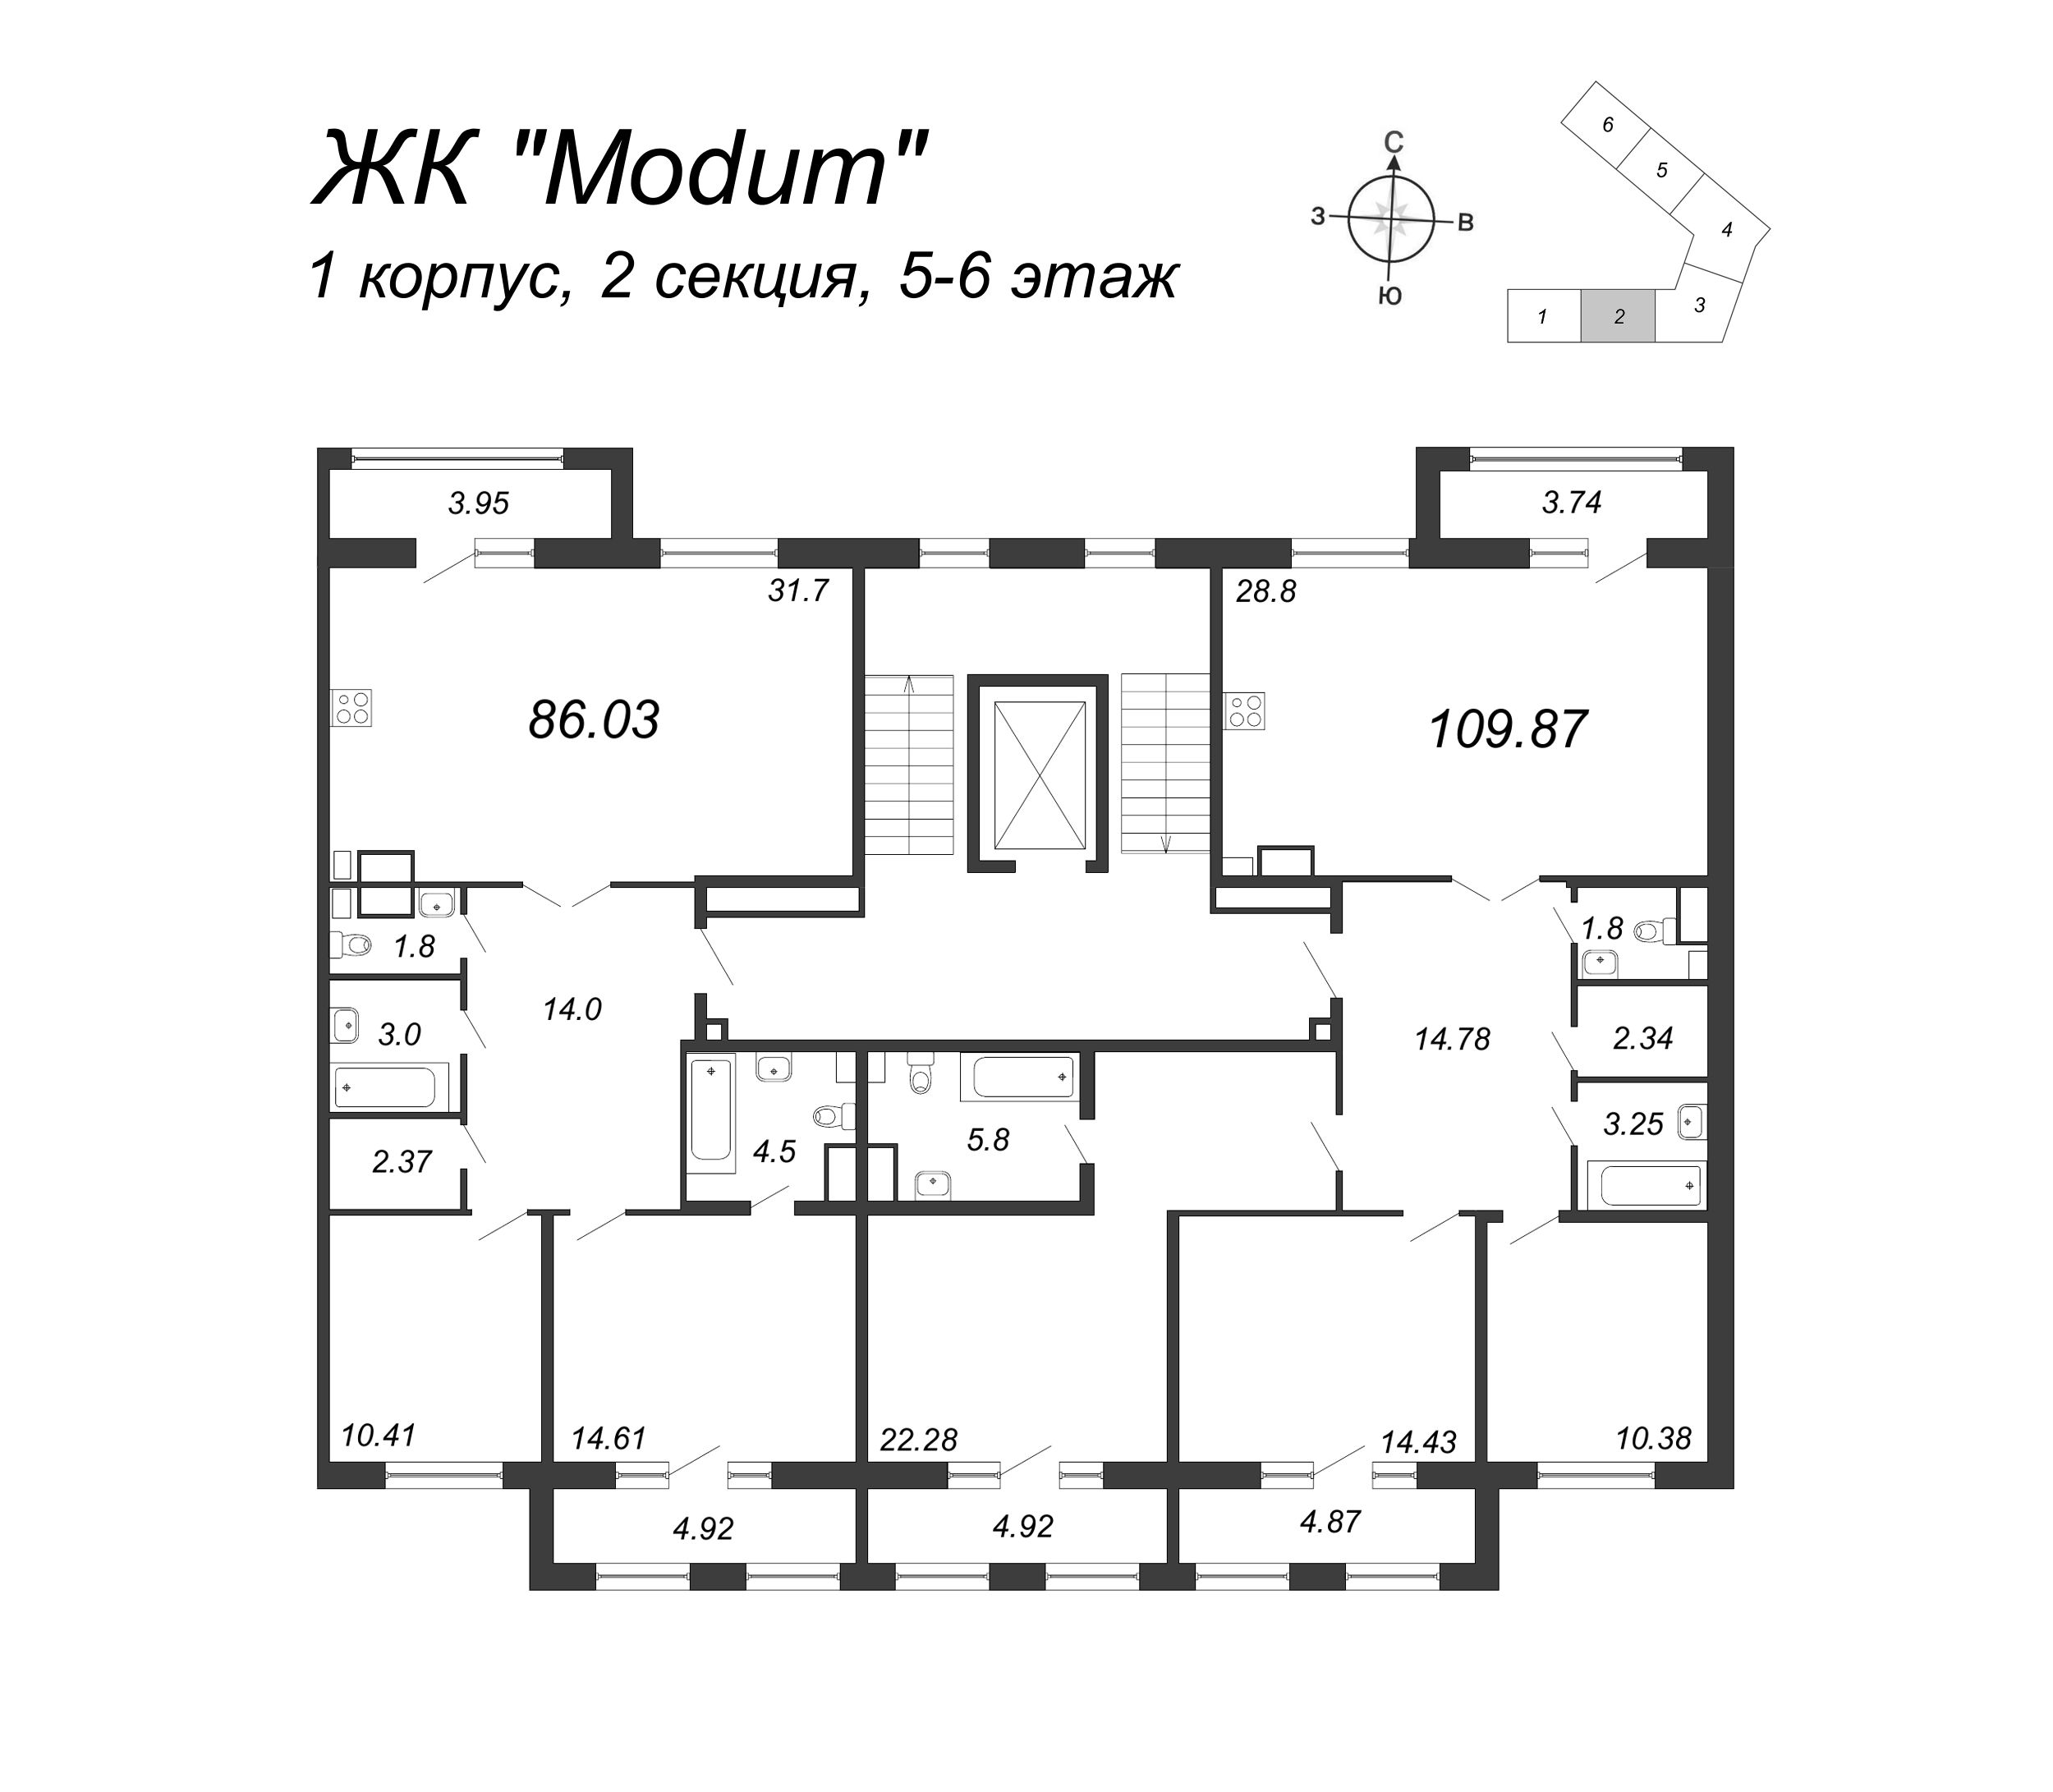 4-комнатная (Евро) квартира, 109.87 м² - планировка этажа